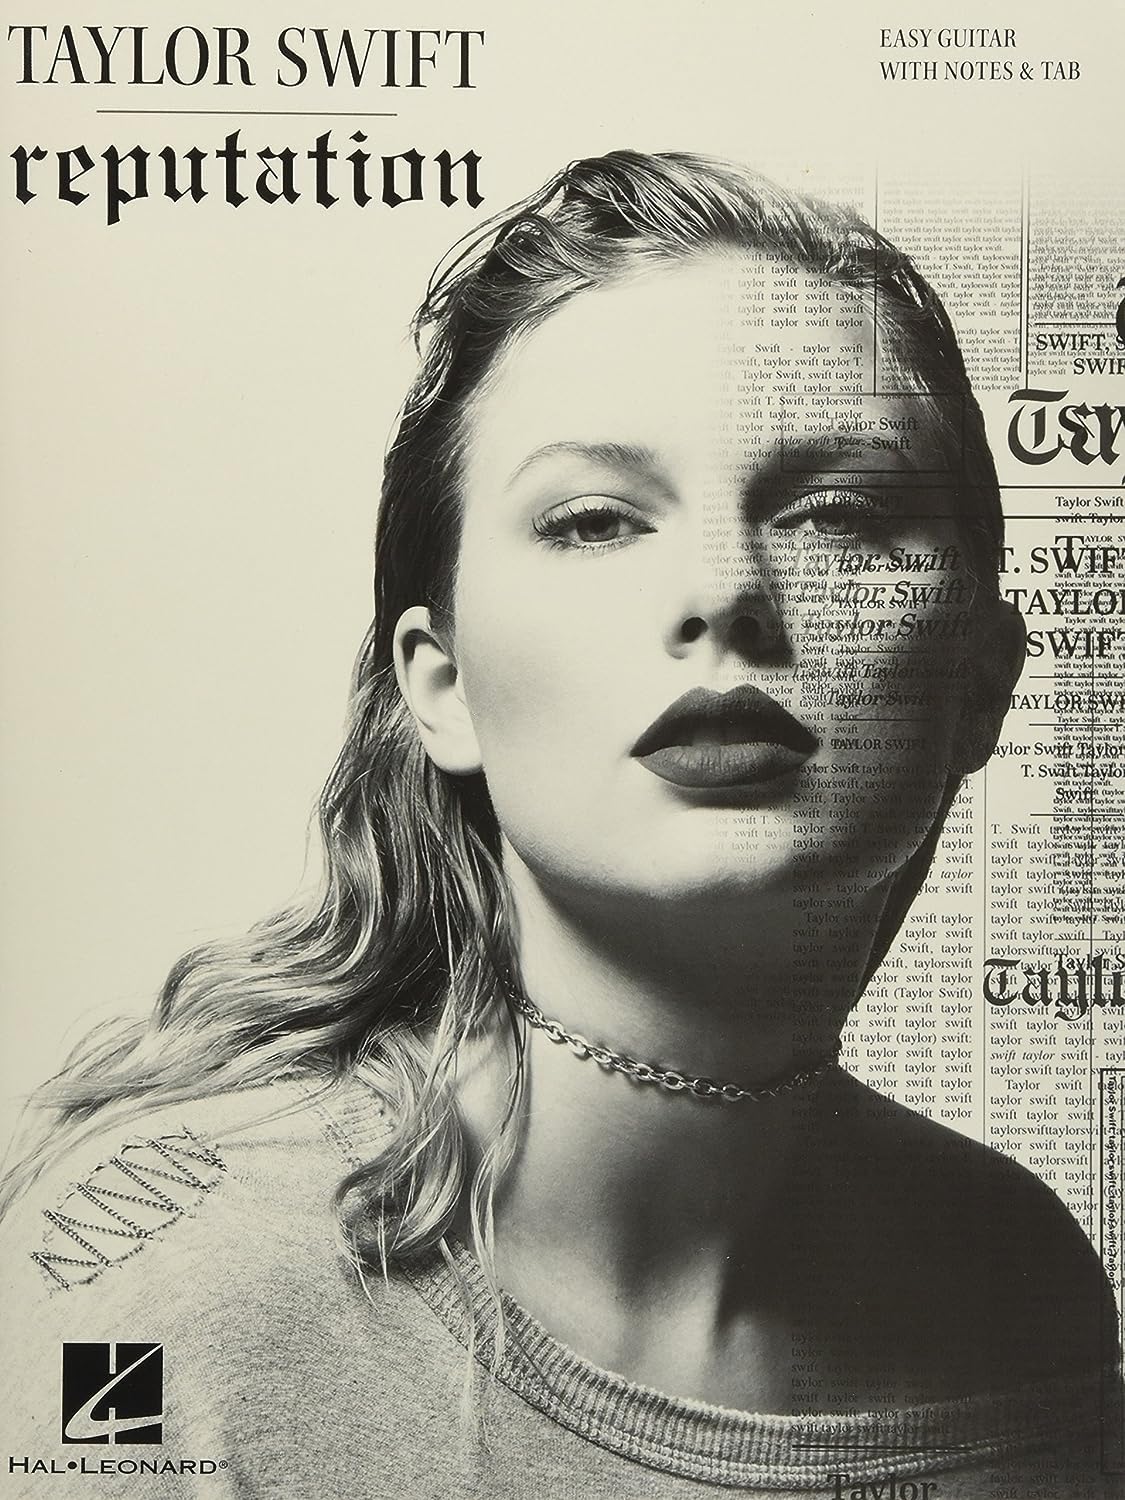 Taylor Swift - Reputation Tapa blanda Songbook For Easy Guitar en inglés